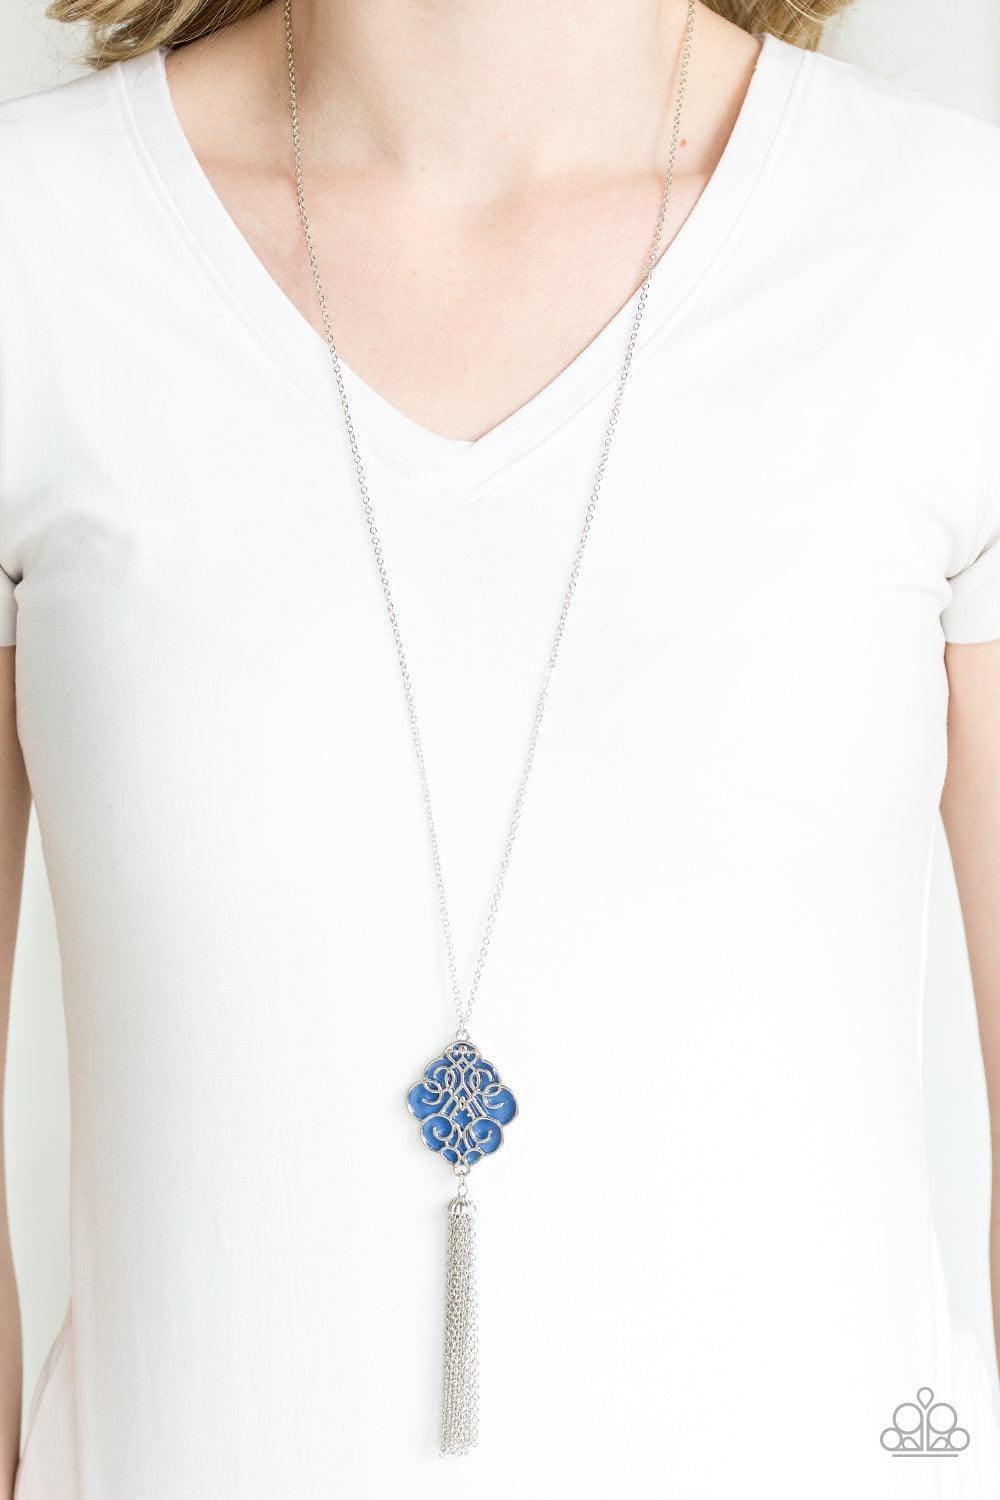 Paparazzi Accessories - Malibu Mandala - Blue Necklace - Bling by JessieK